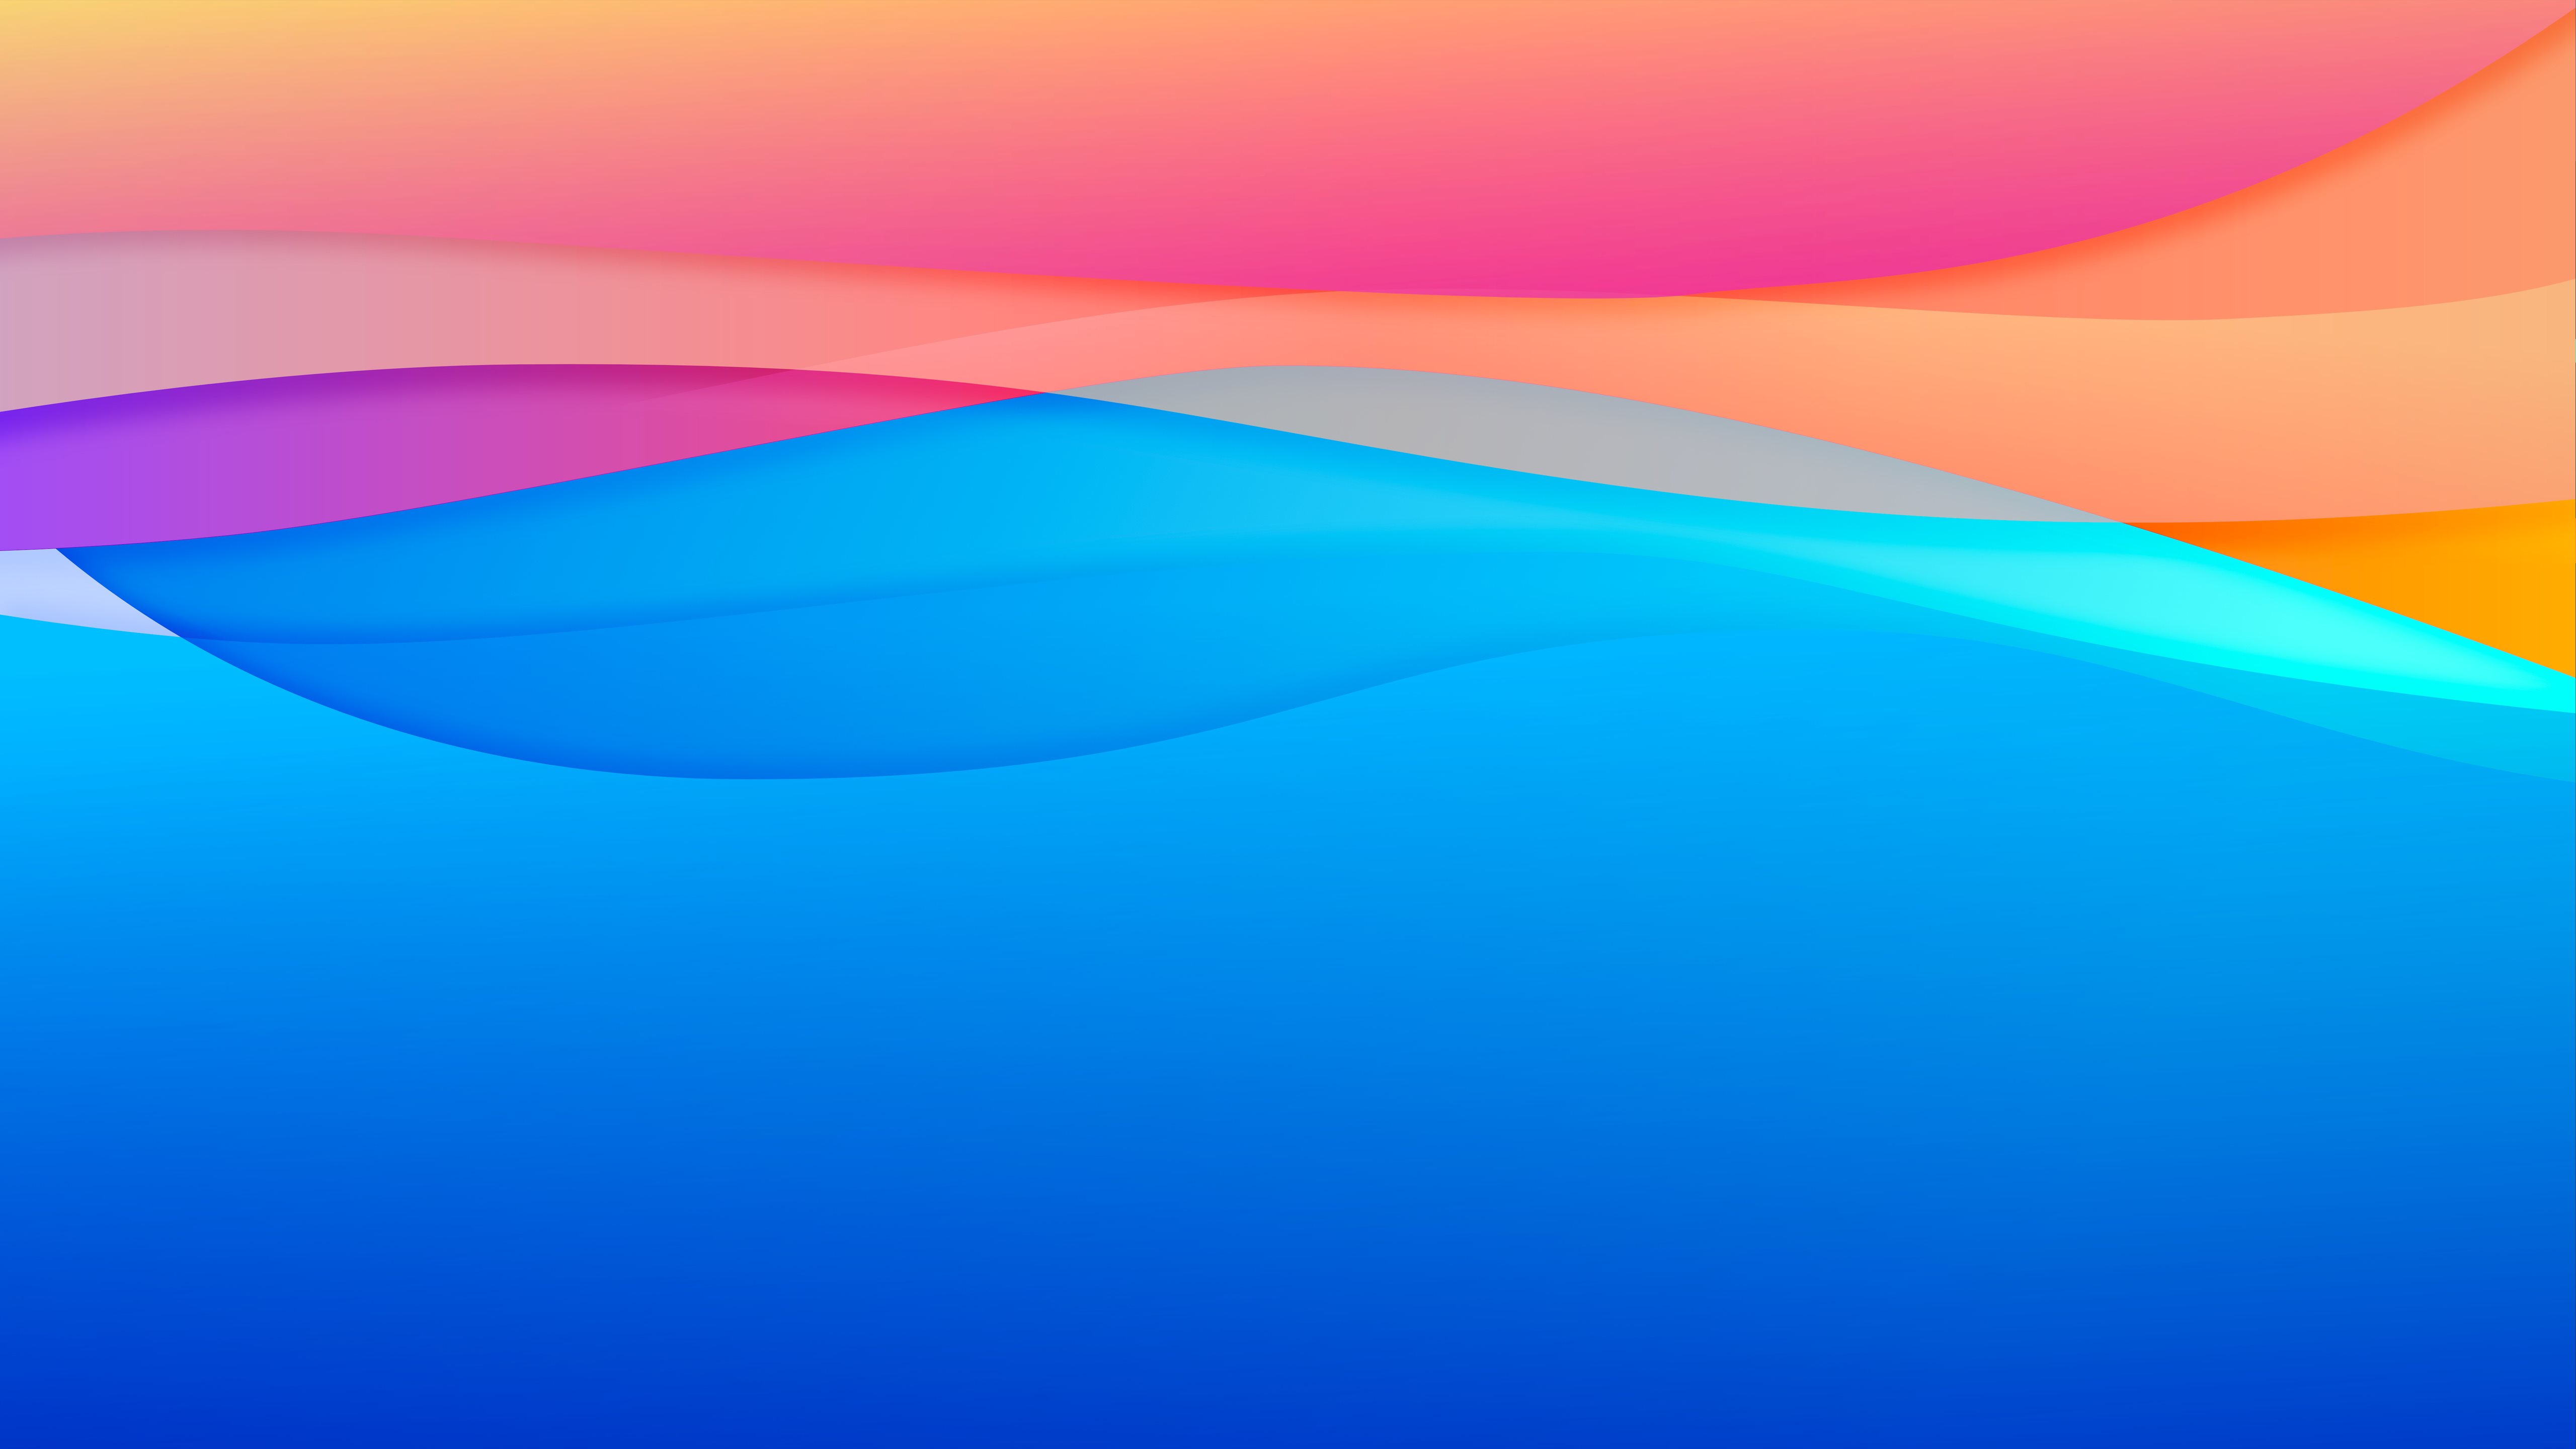 Every Default macOS Wallpaper – in Glorious 6K Resolution – 512 Pixels